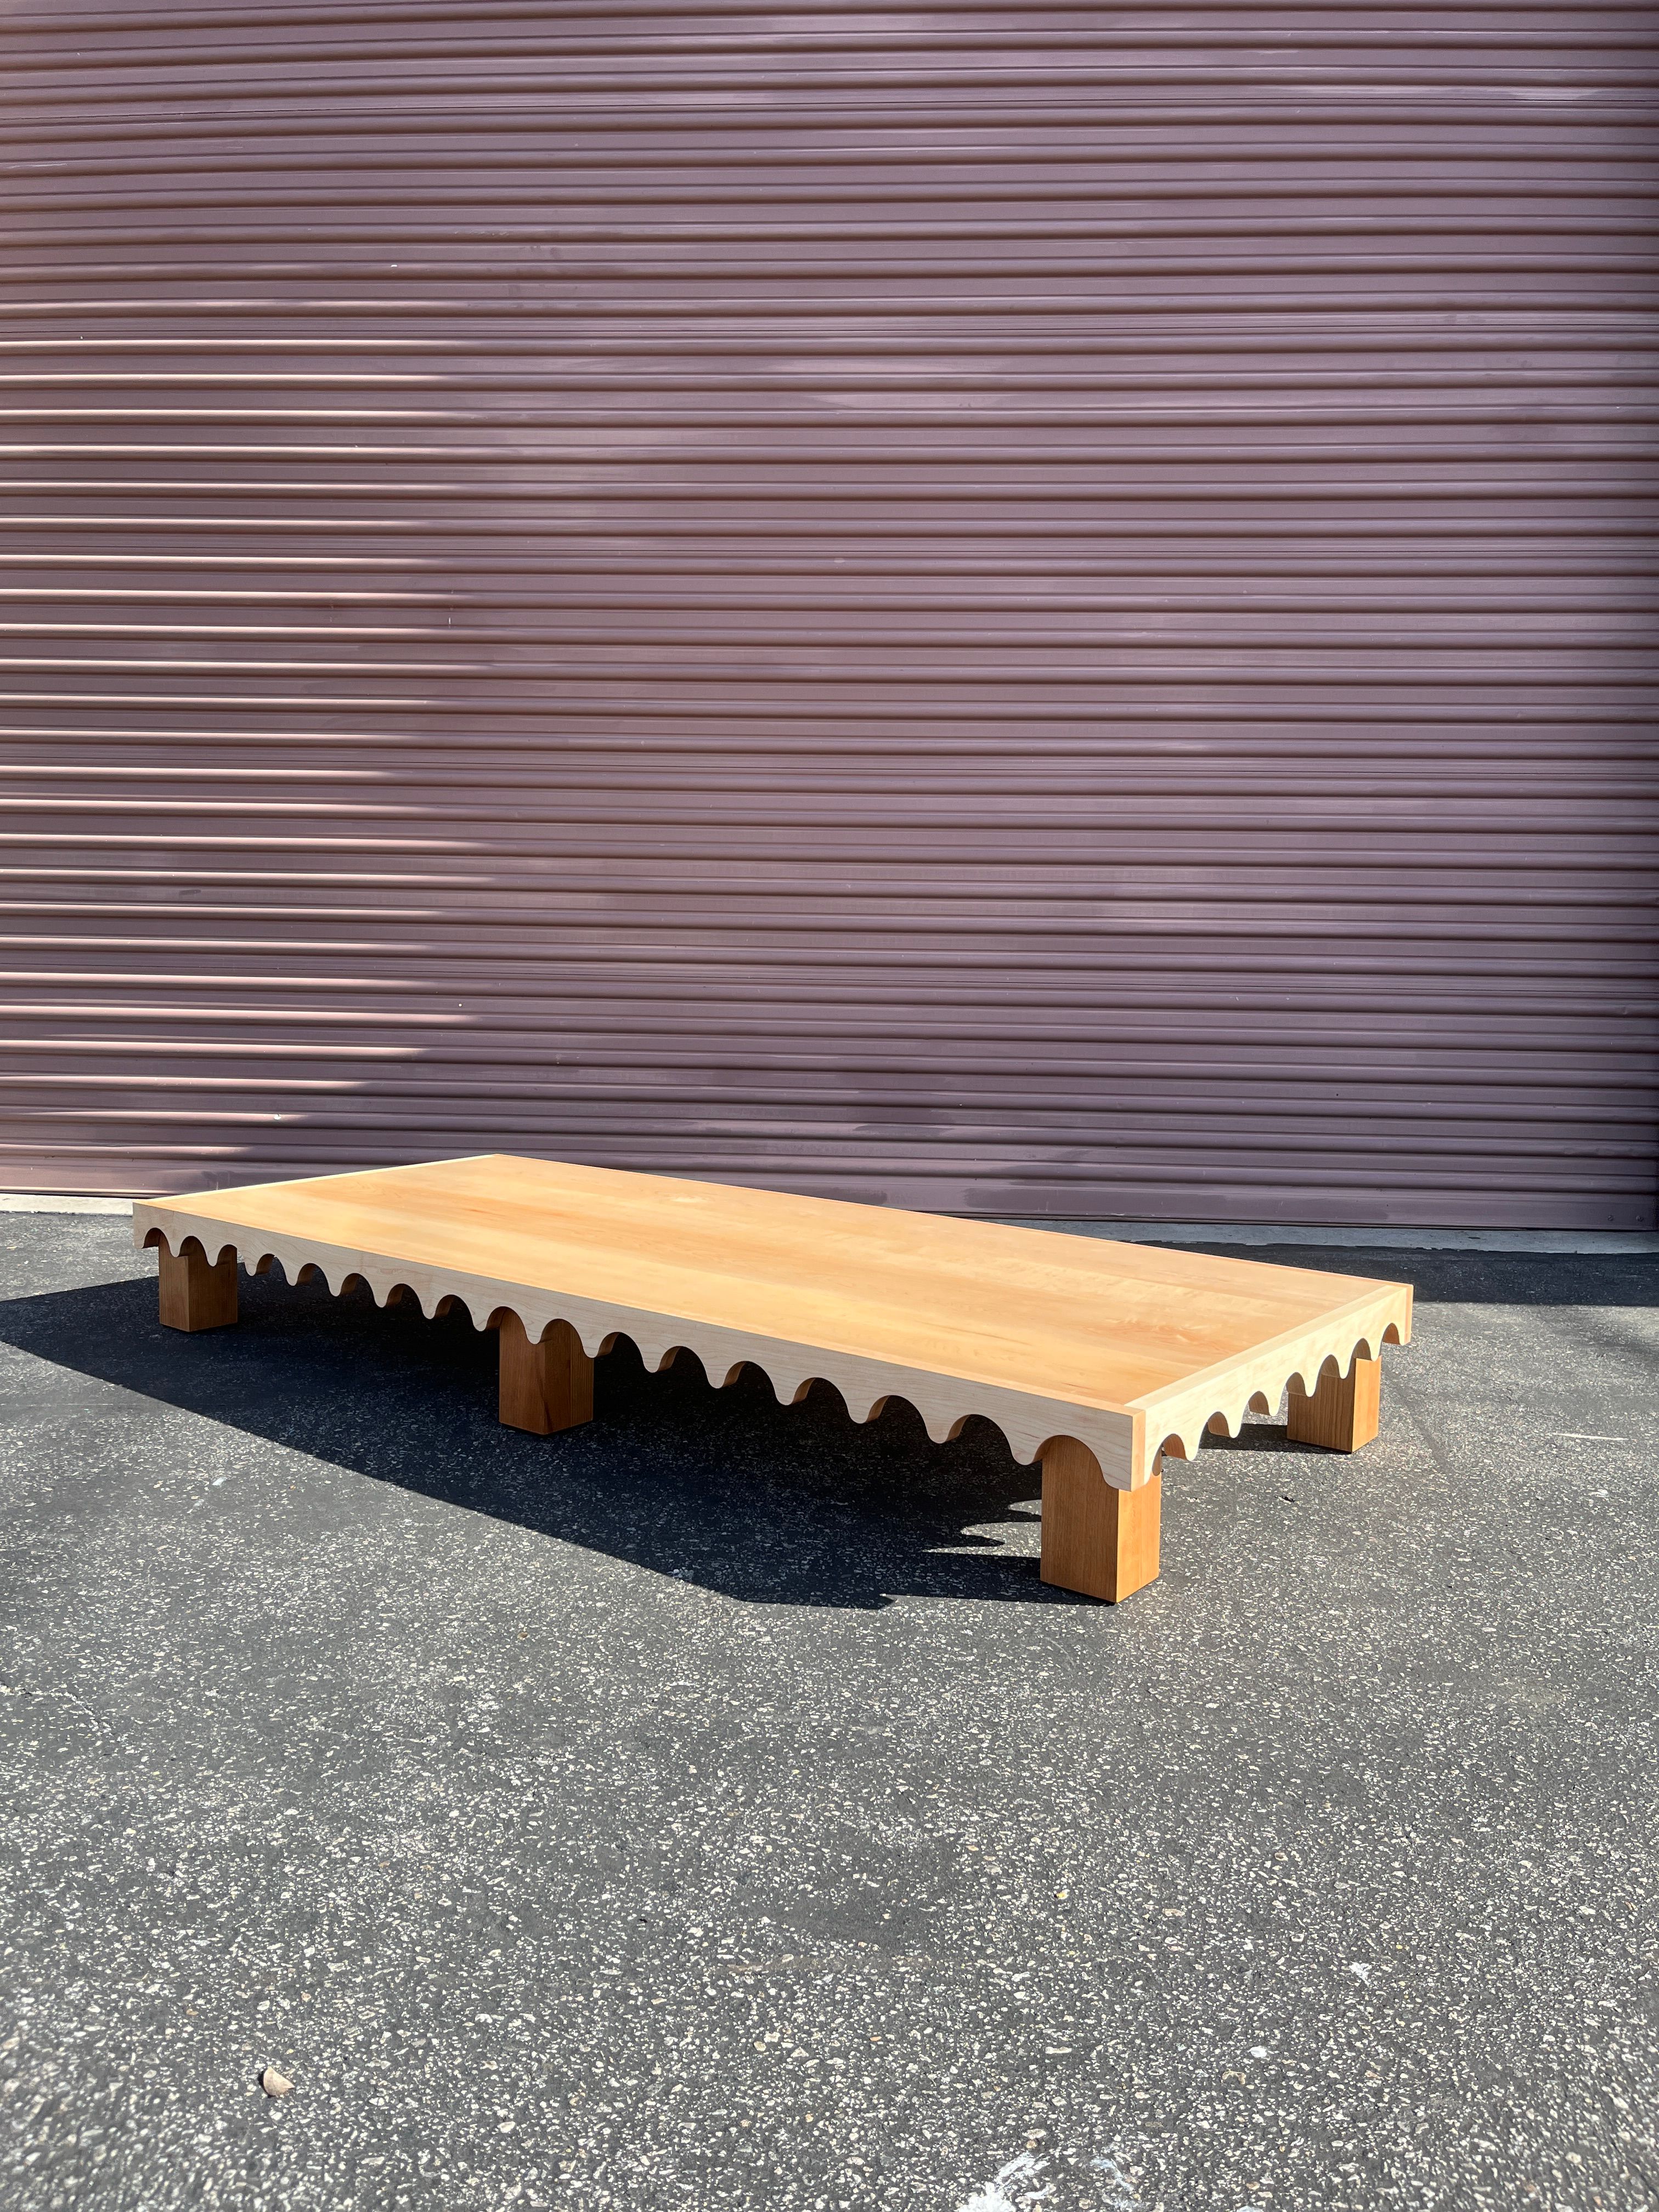  Scallop Benches - Laun Studio product image 5